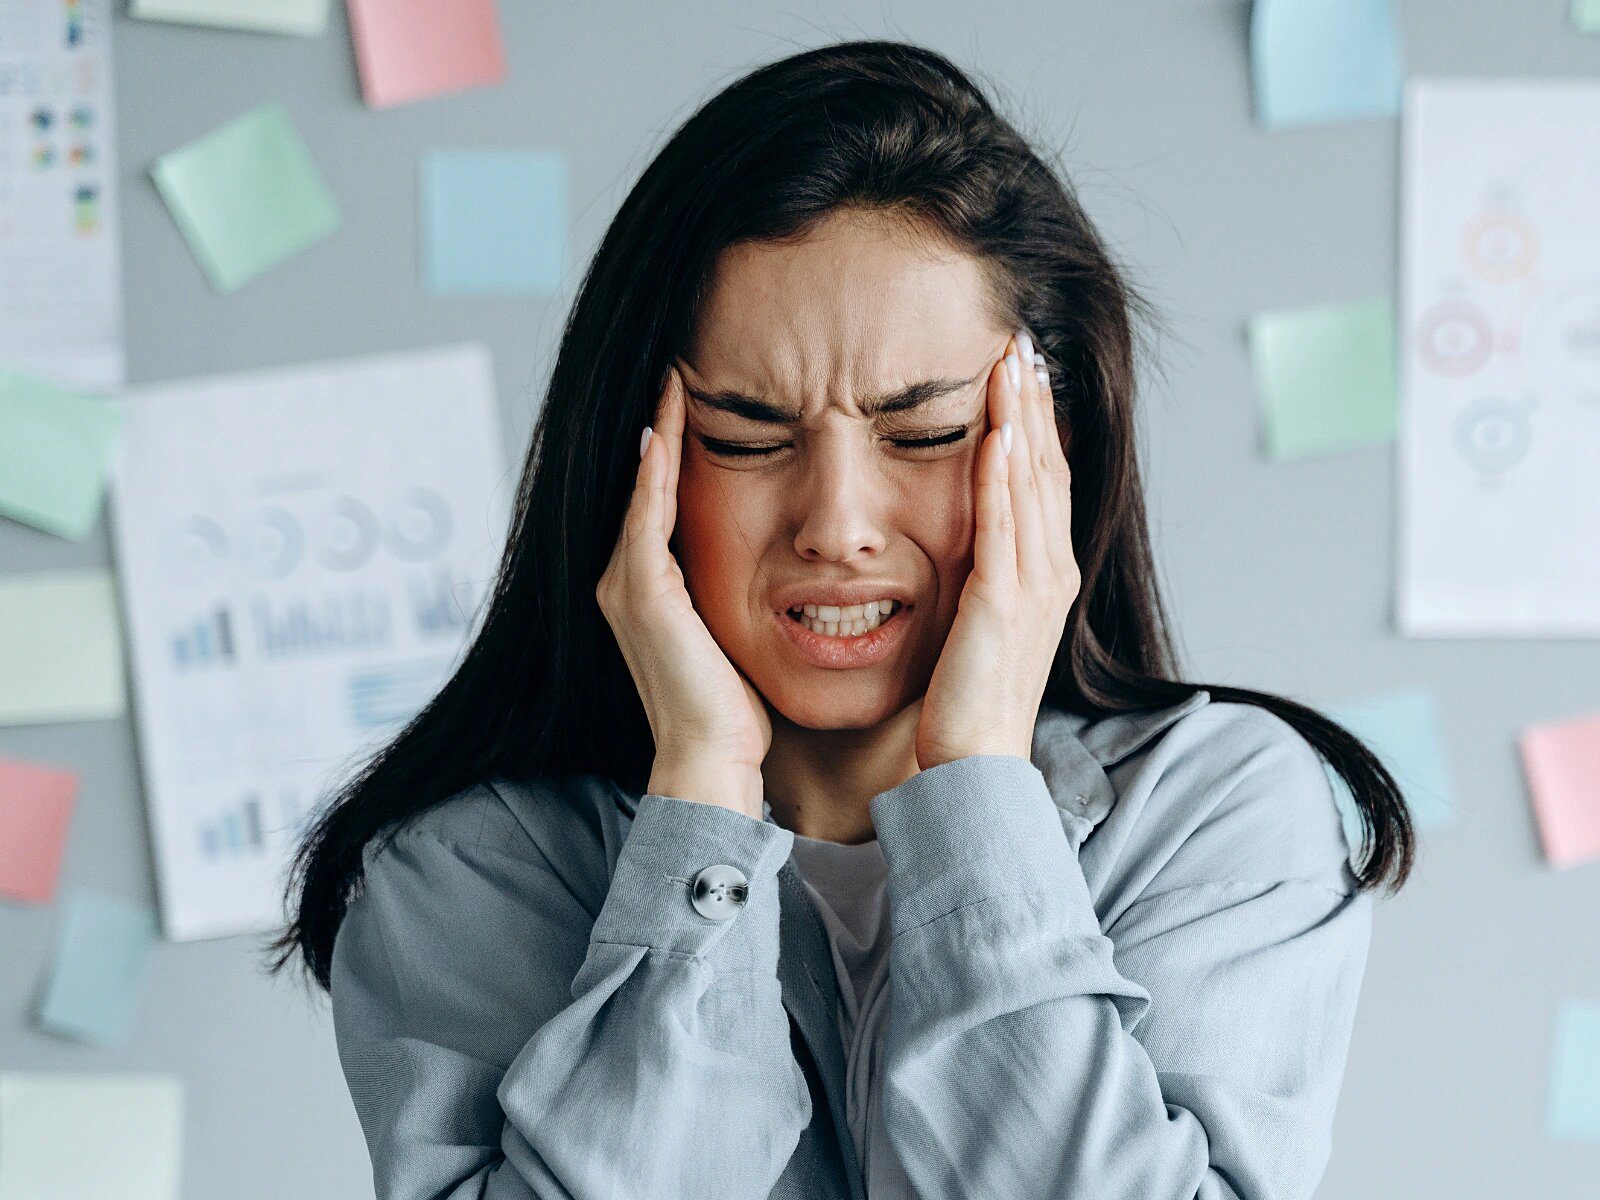 Migraine Pain: ਮਾਈਗ੍ਰੇਨ ਲਈ ਕਿਹੜੇ ਭੋਜਨ ਹਨ ਫ਼ਾਇਦੇਮੰਦ, ਹਲਦੀ ਵਾਲਾ ਦੁੱਧ ਵੀ ਜਲਦ ਕਰੇਗਾ ਅਸਰ 
